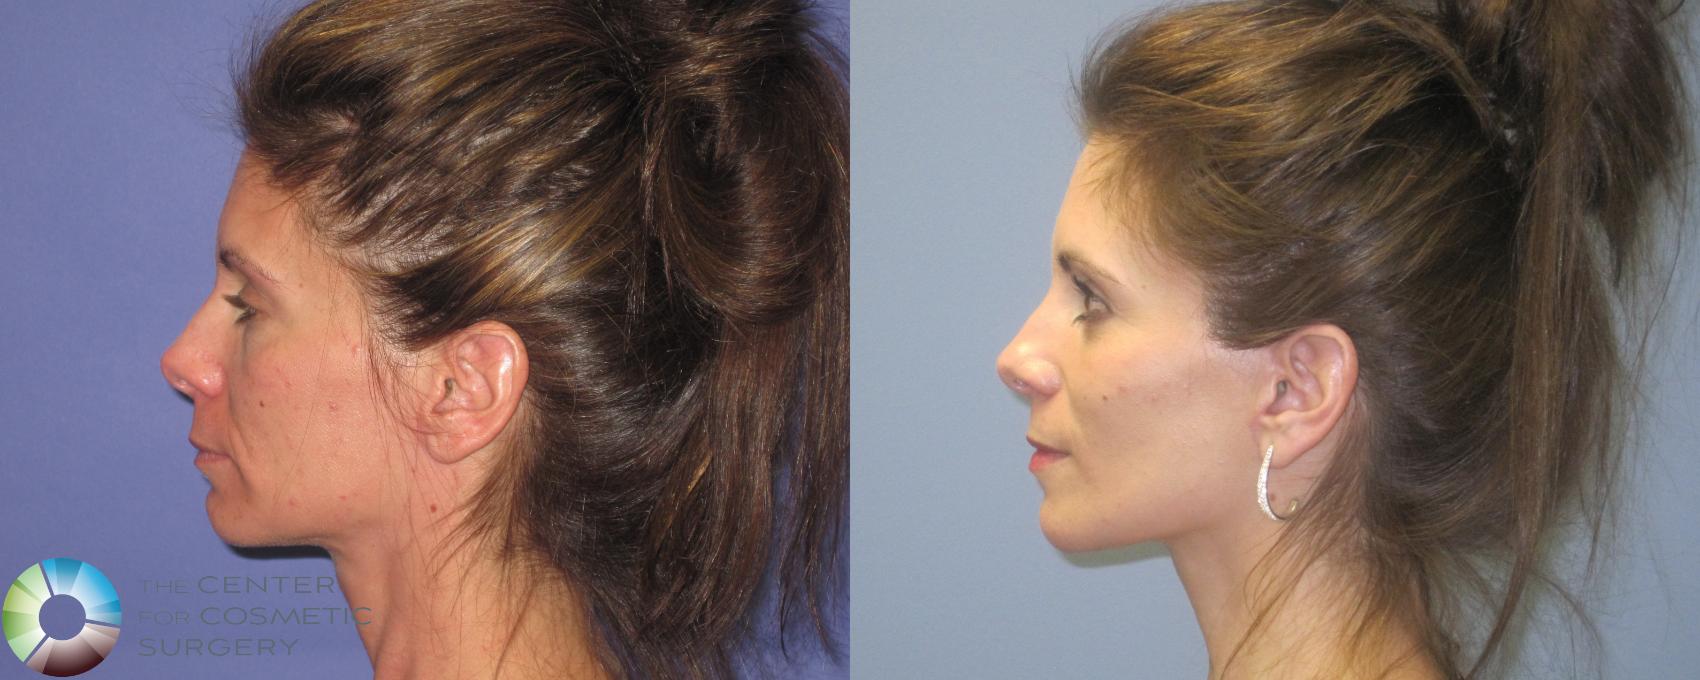 Before & After Laser Skin Resurfacing Case 462 View #3 View in Denver & Golden, CO